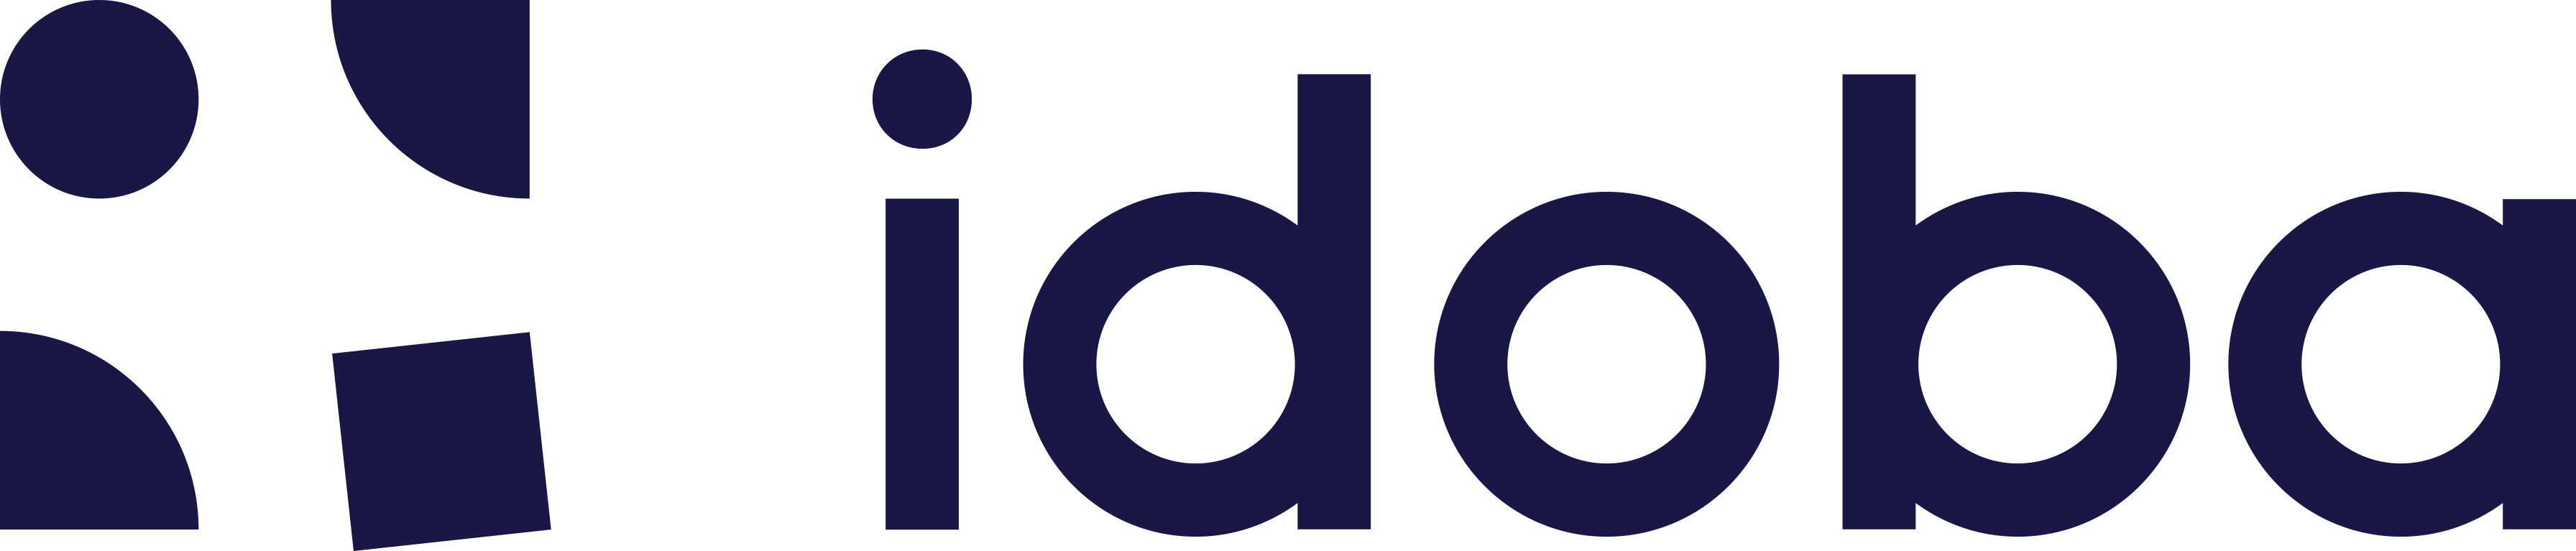 Our businesses • idoba logo dark purple RGB